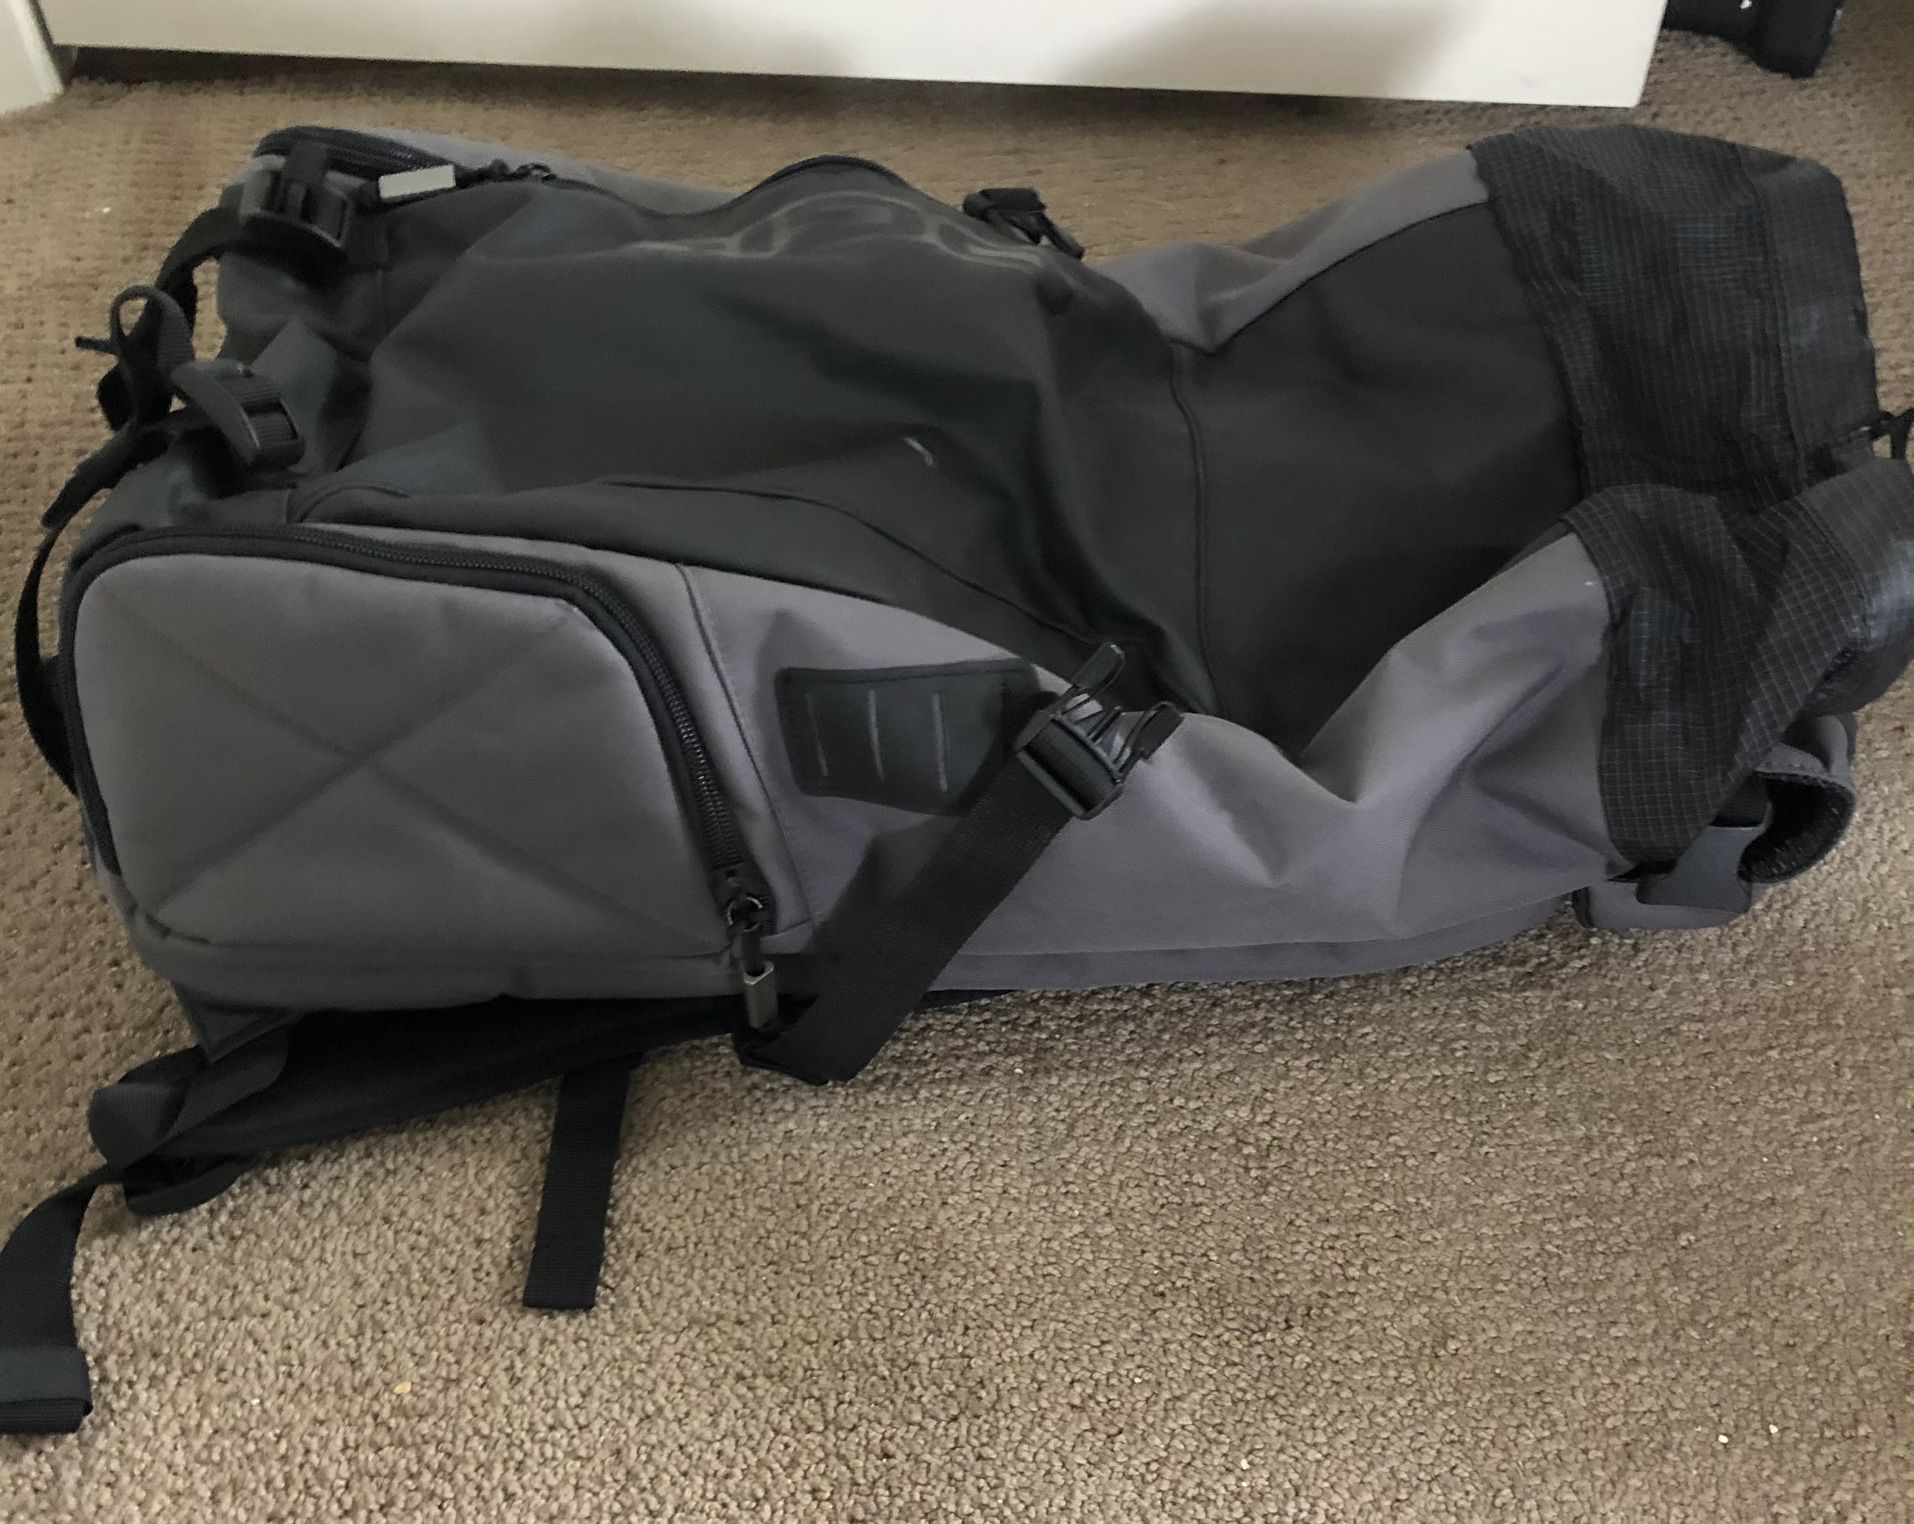 OGIO backpack